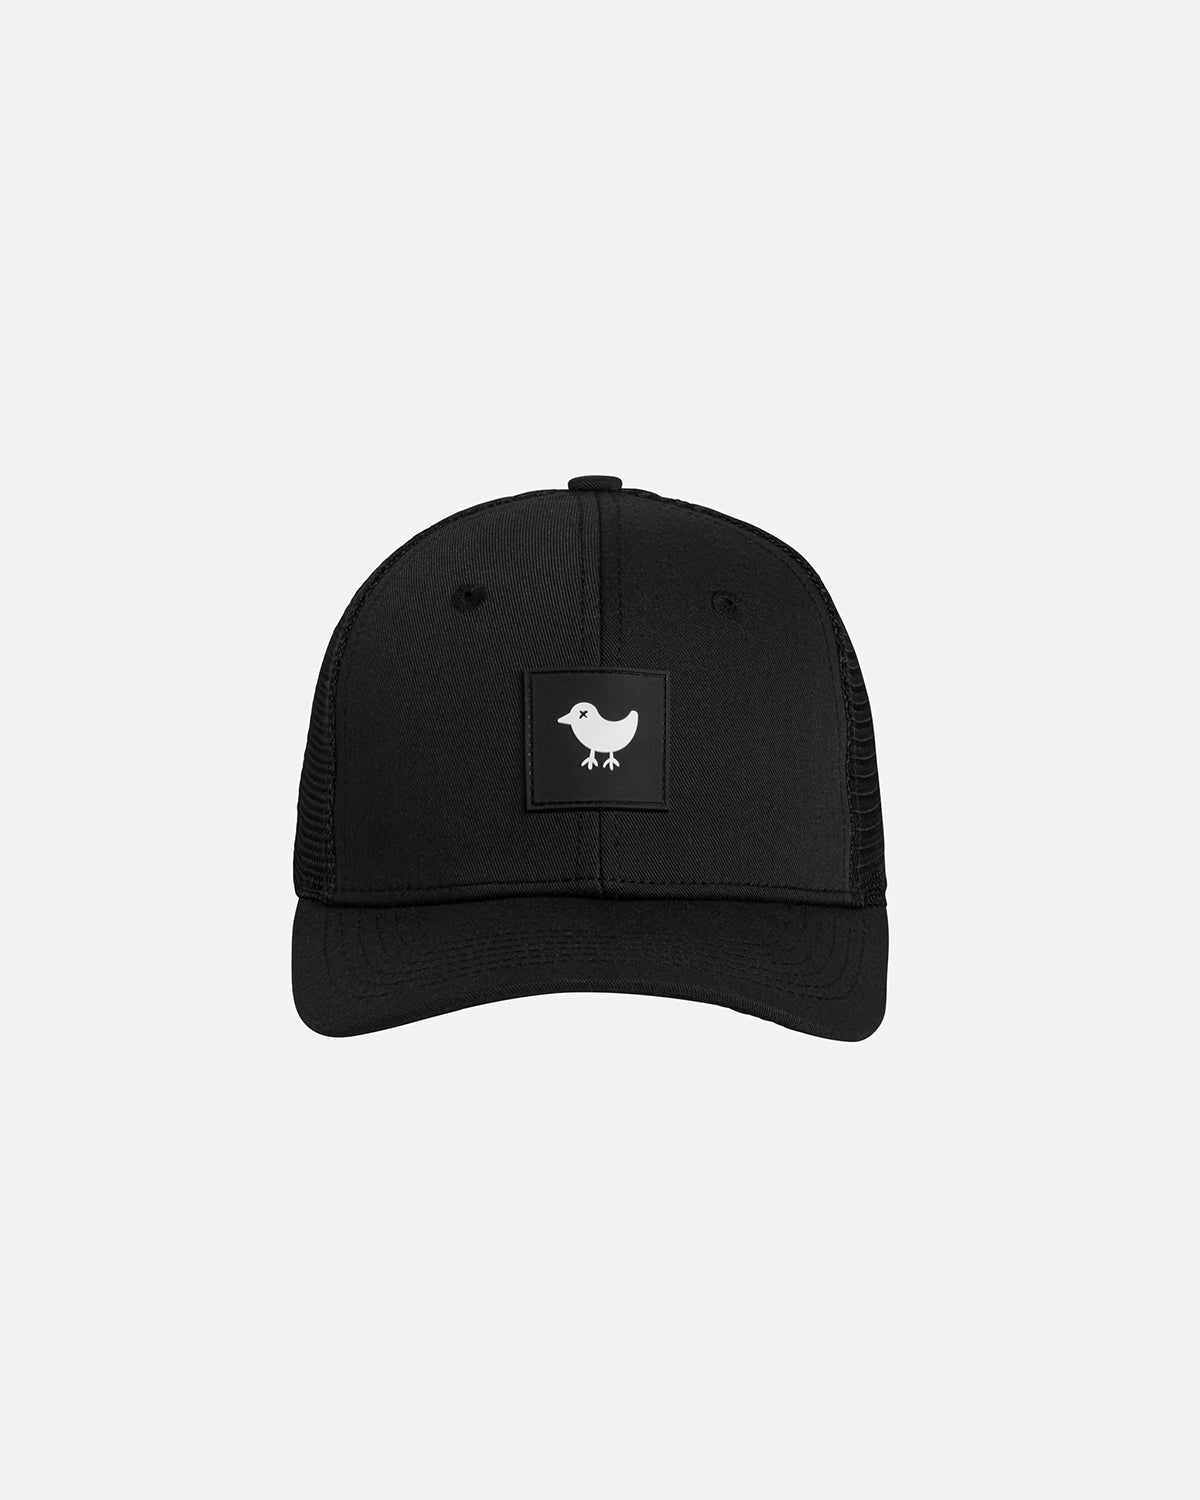 Birds Arent Real Baseball Cap Men Women - Classic Plain Trucker Hat Black  at  Men's Clothing store